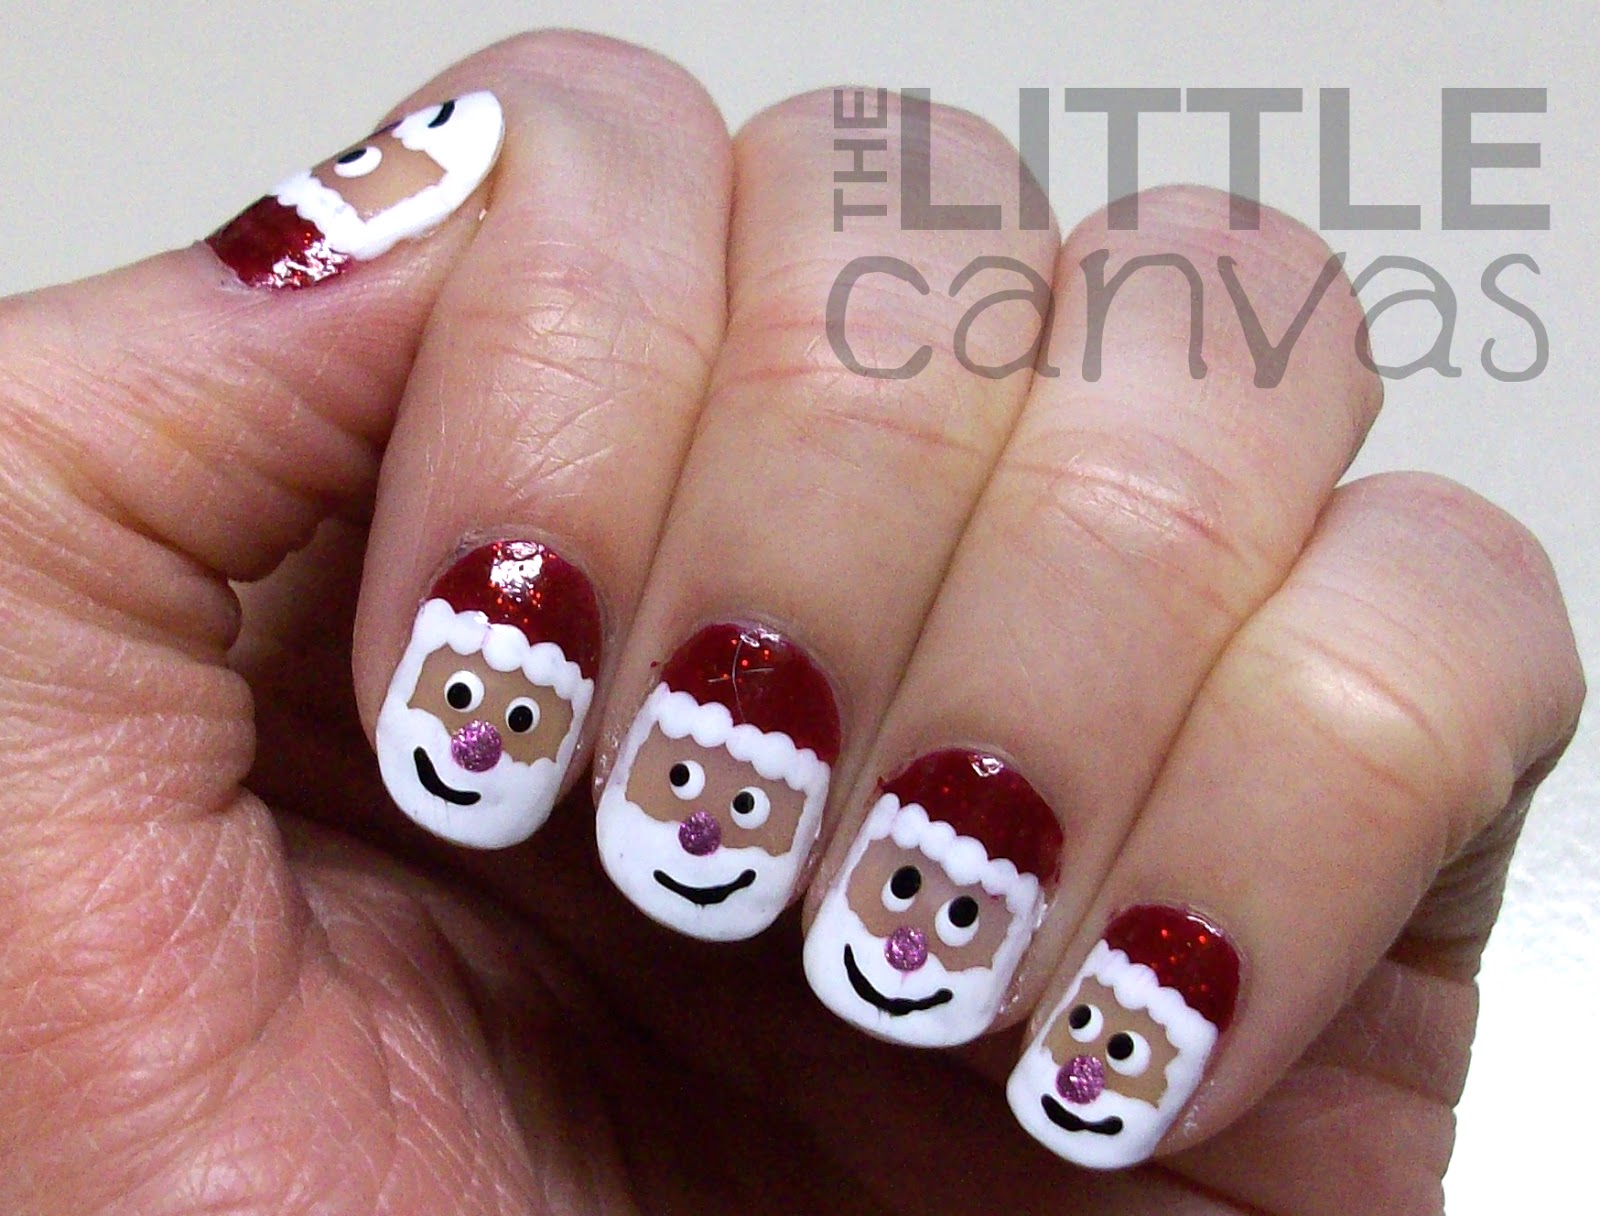 1. Christmas Santa Claus Nail Art Designs - wide 5